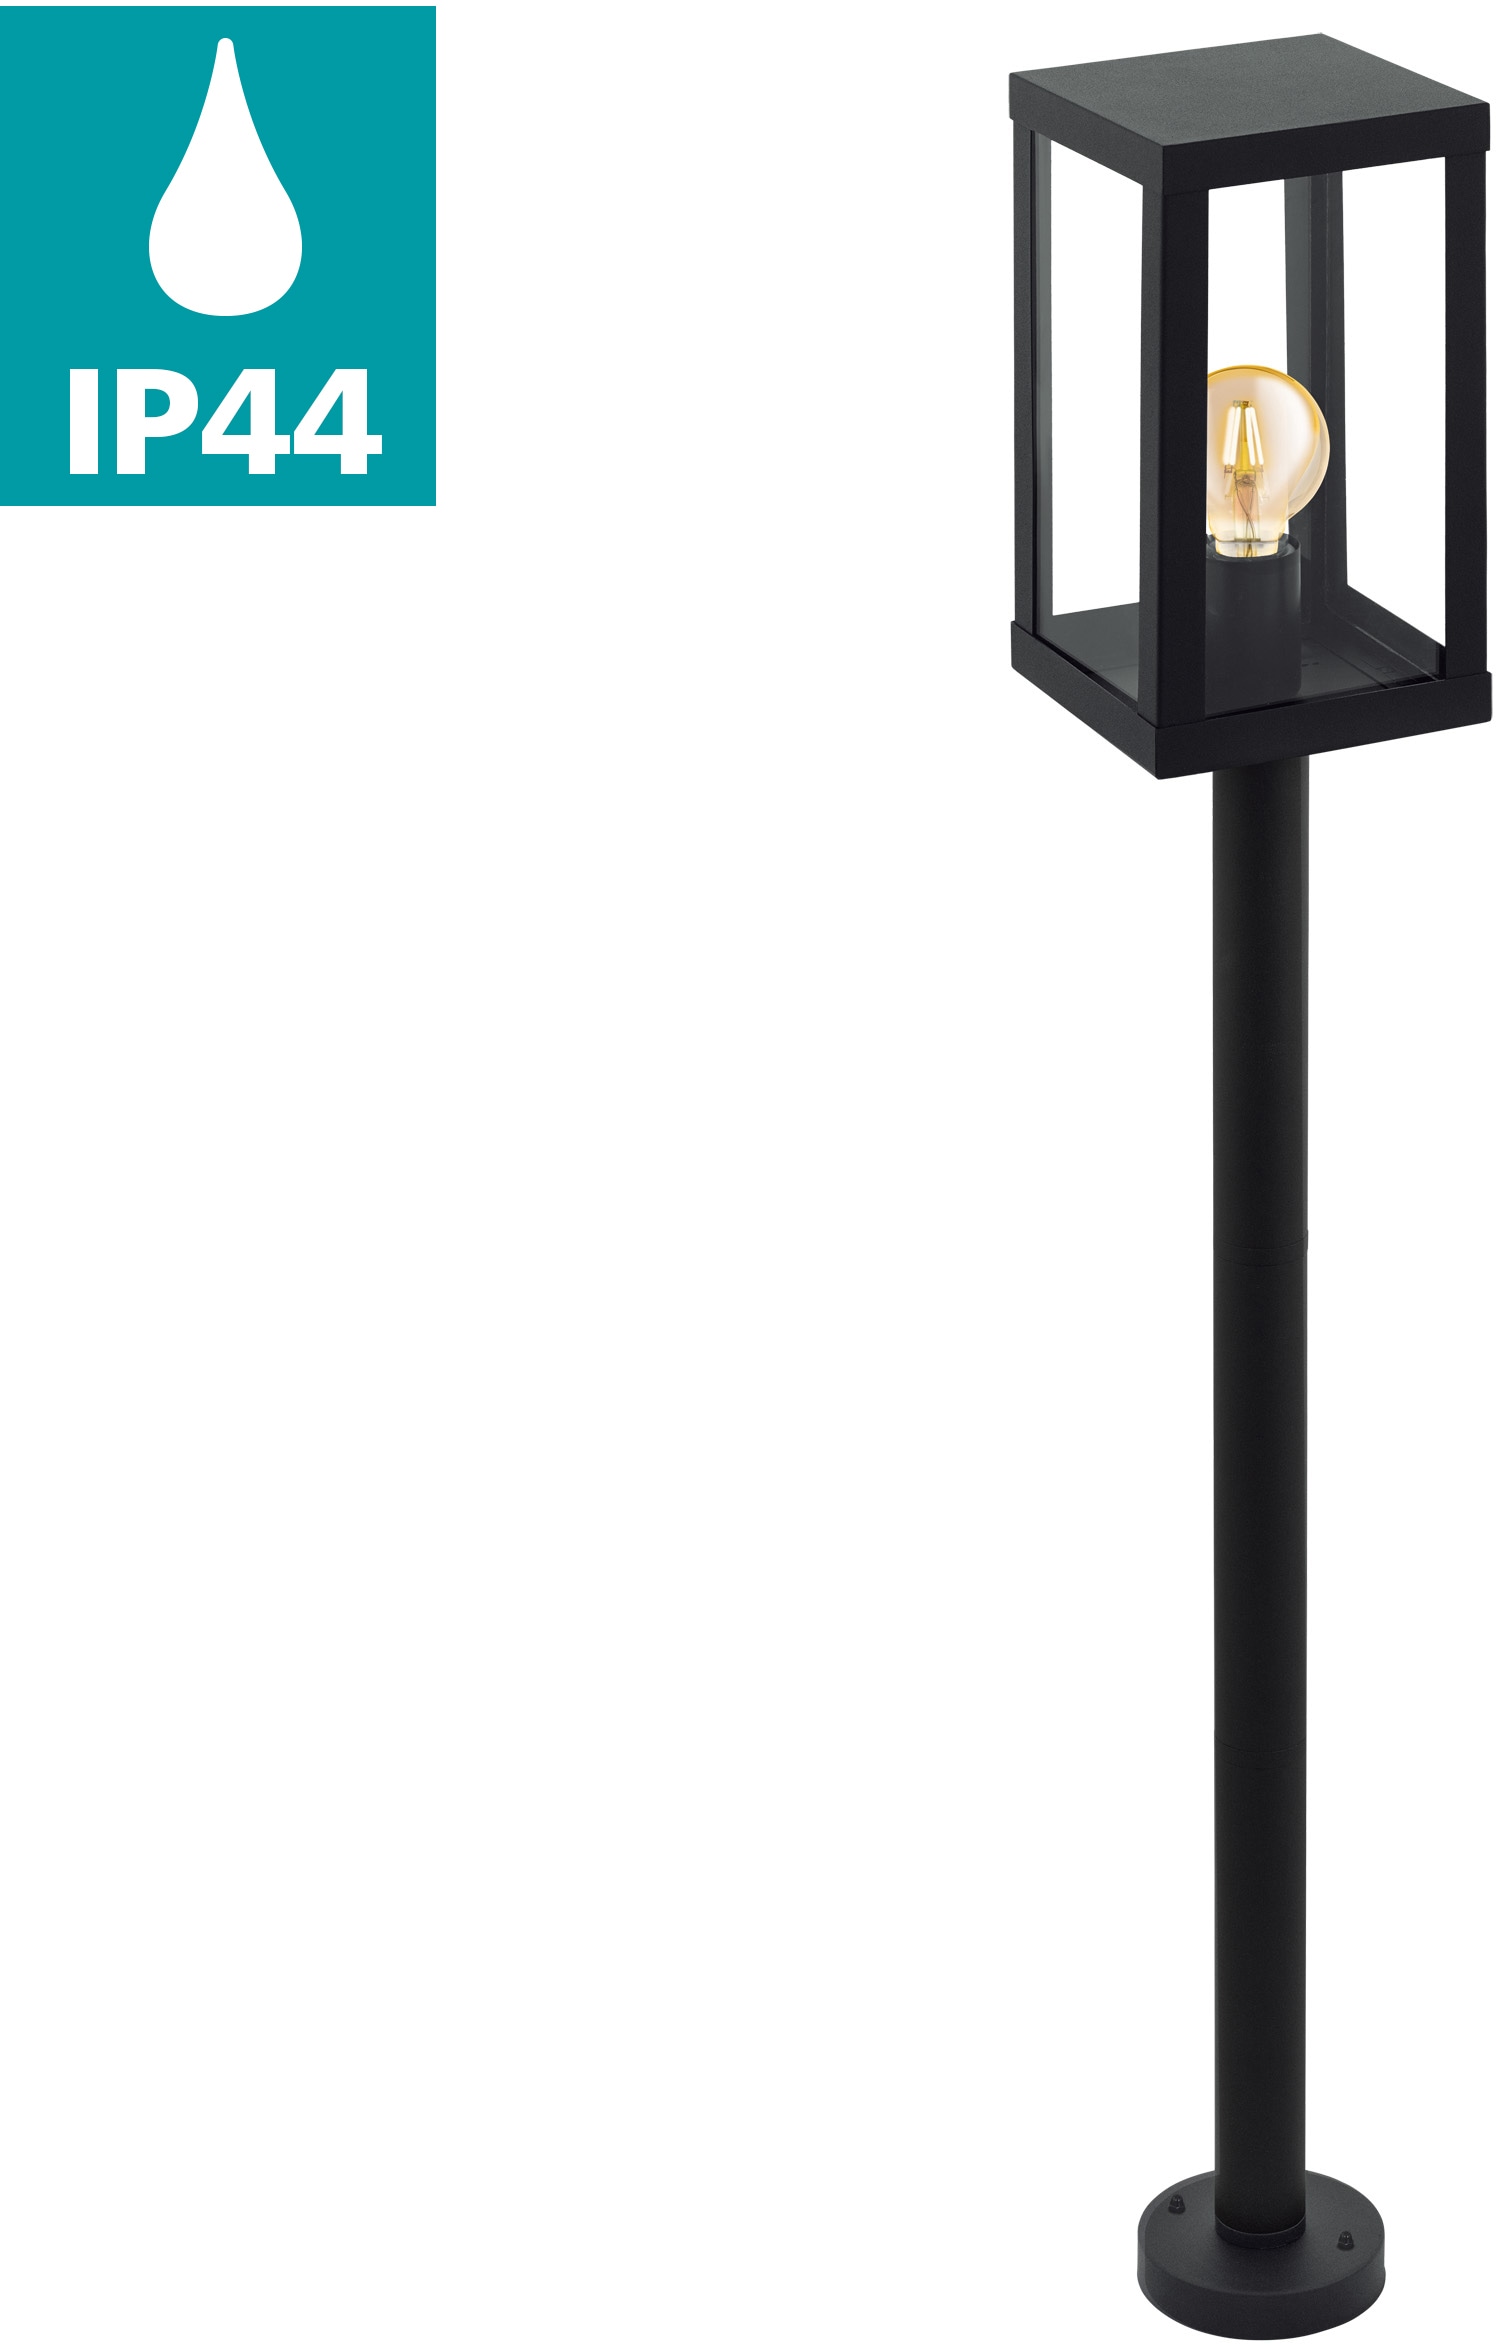 EGLO Außen-Stehlampe "ALAMONTE 1", E27, schwarz / L15 x H101,5 x B15 cm / exkl. 1 x E27 (je max. 60W) - IP44 spritzwasse